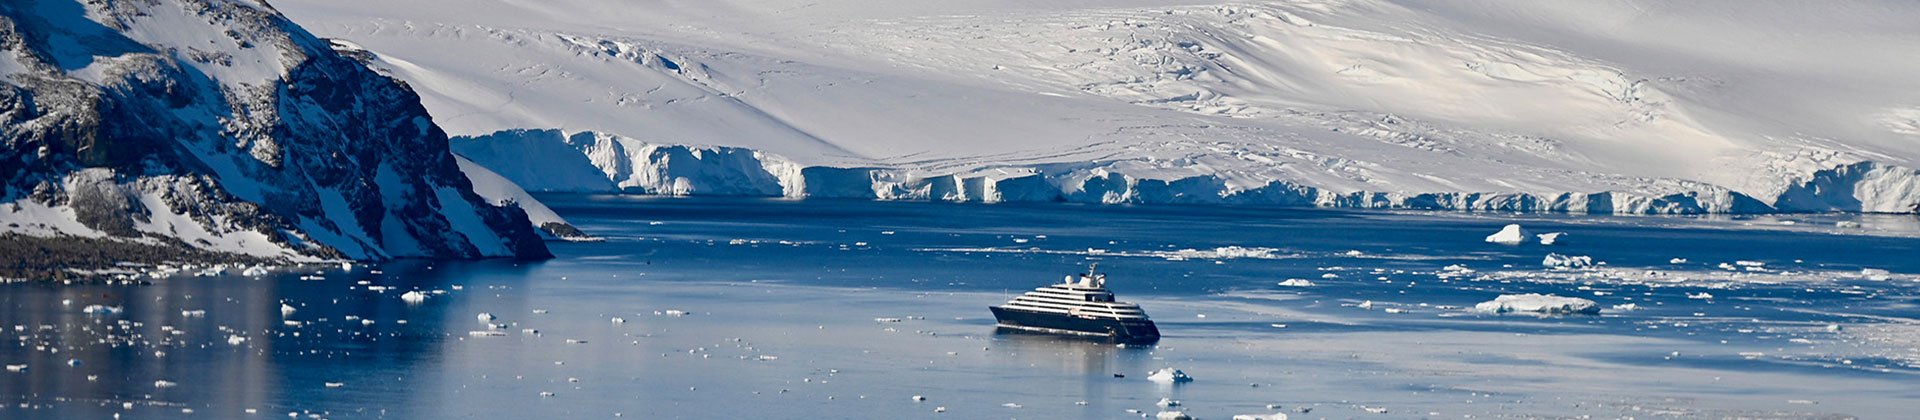 Antarctic in Depth by Scenic